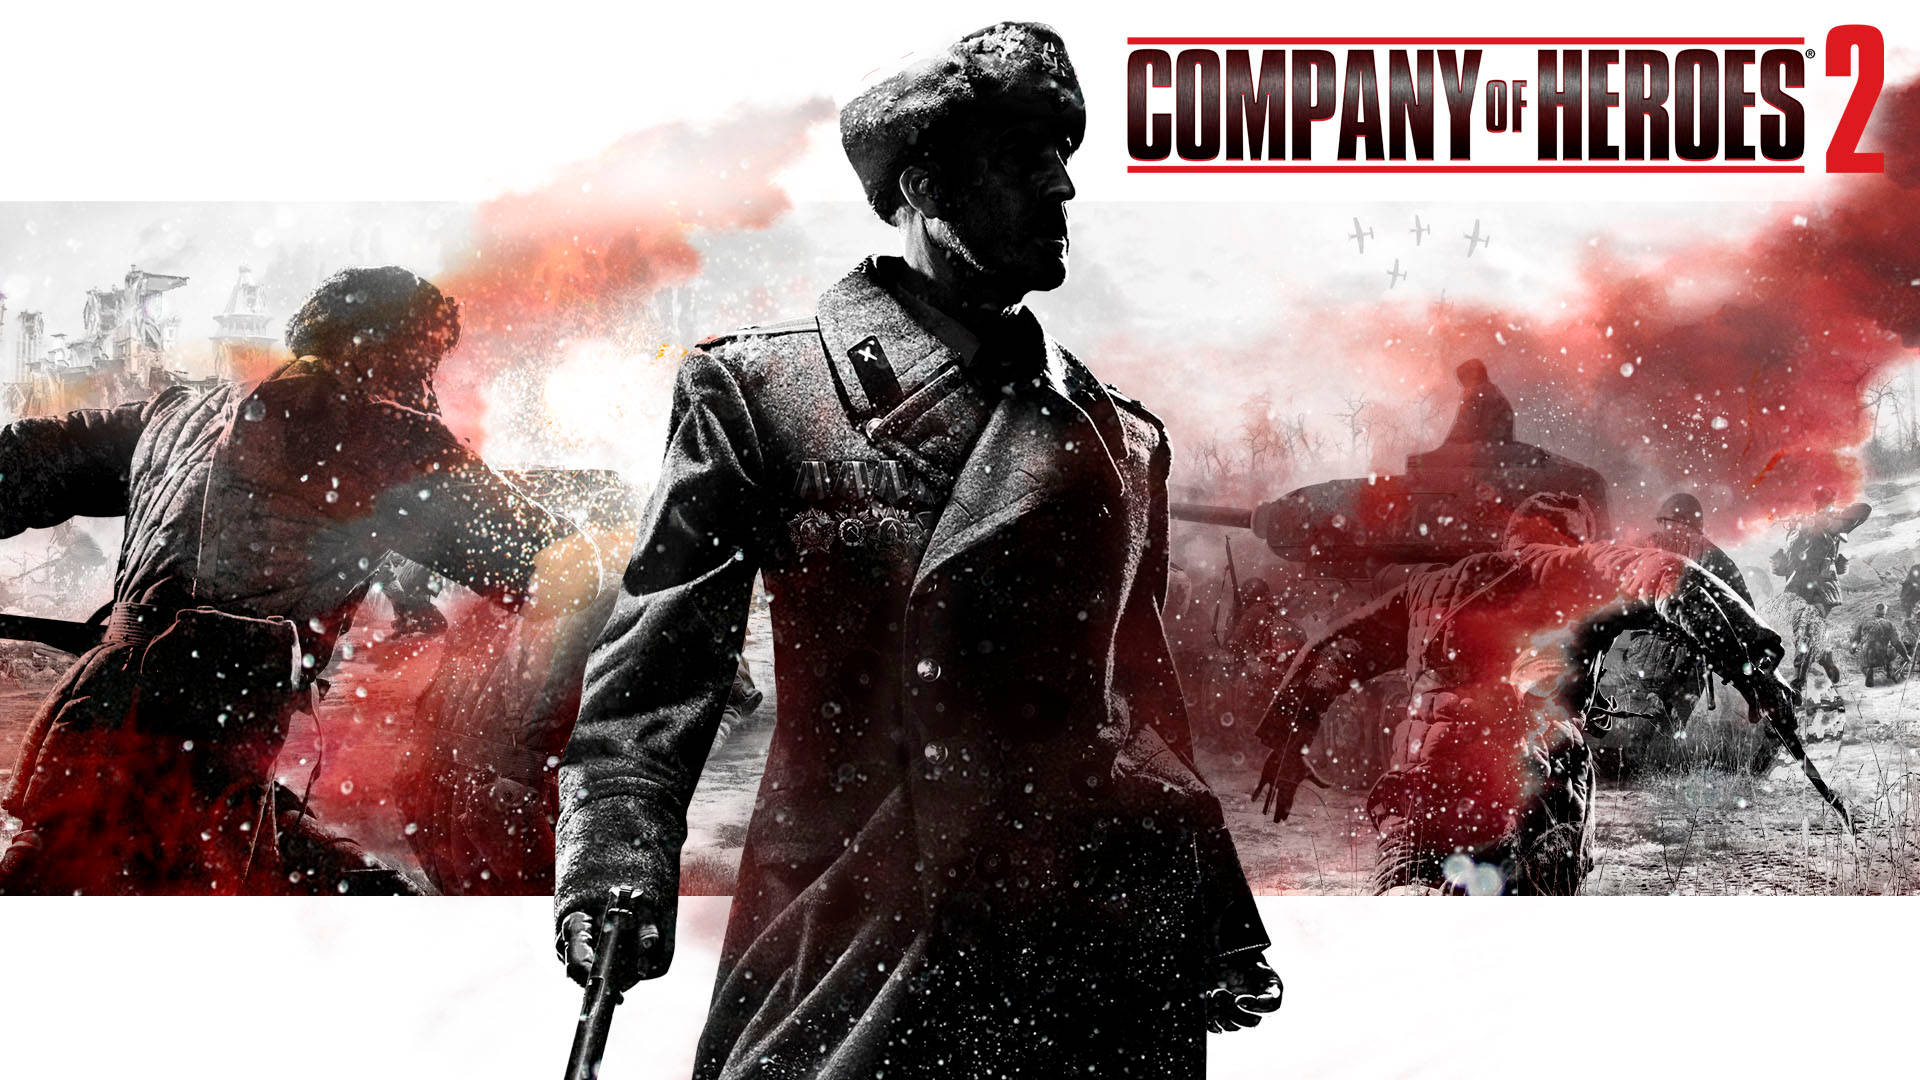 Company of Heroes 2 War Scene Wallpaper